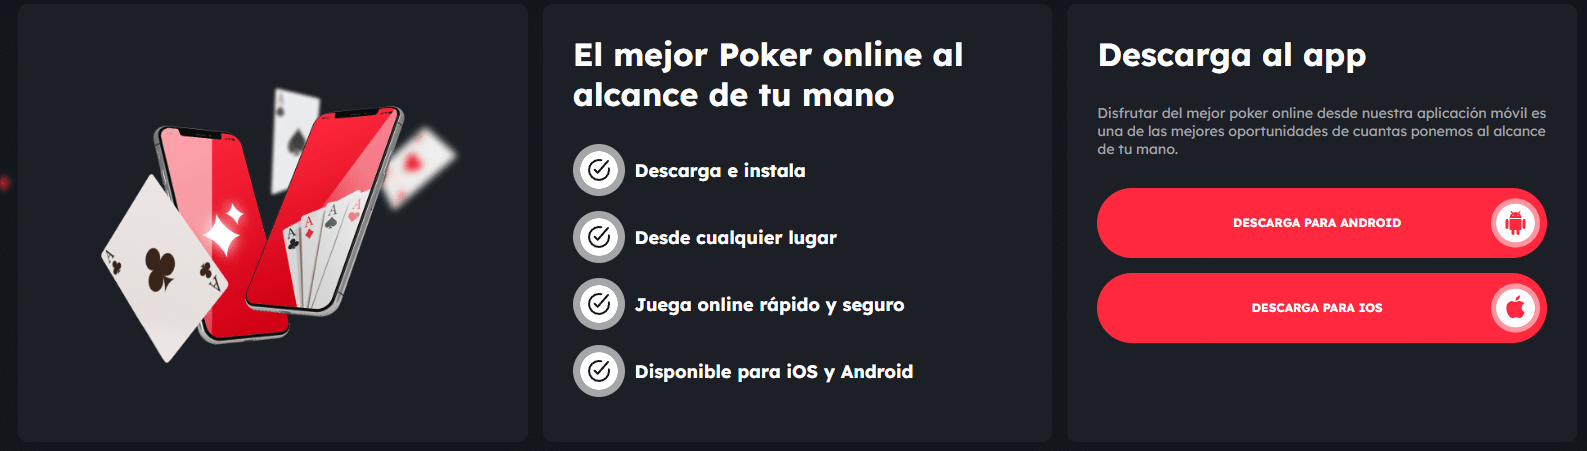 app casino barcelona poker